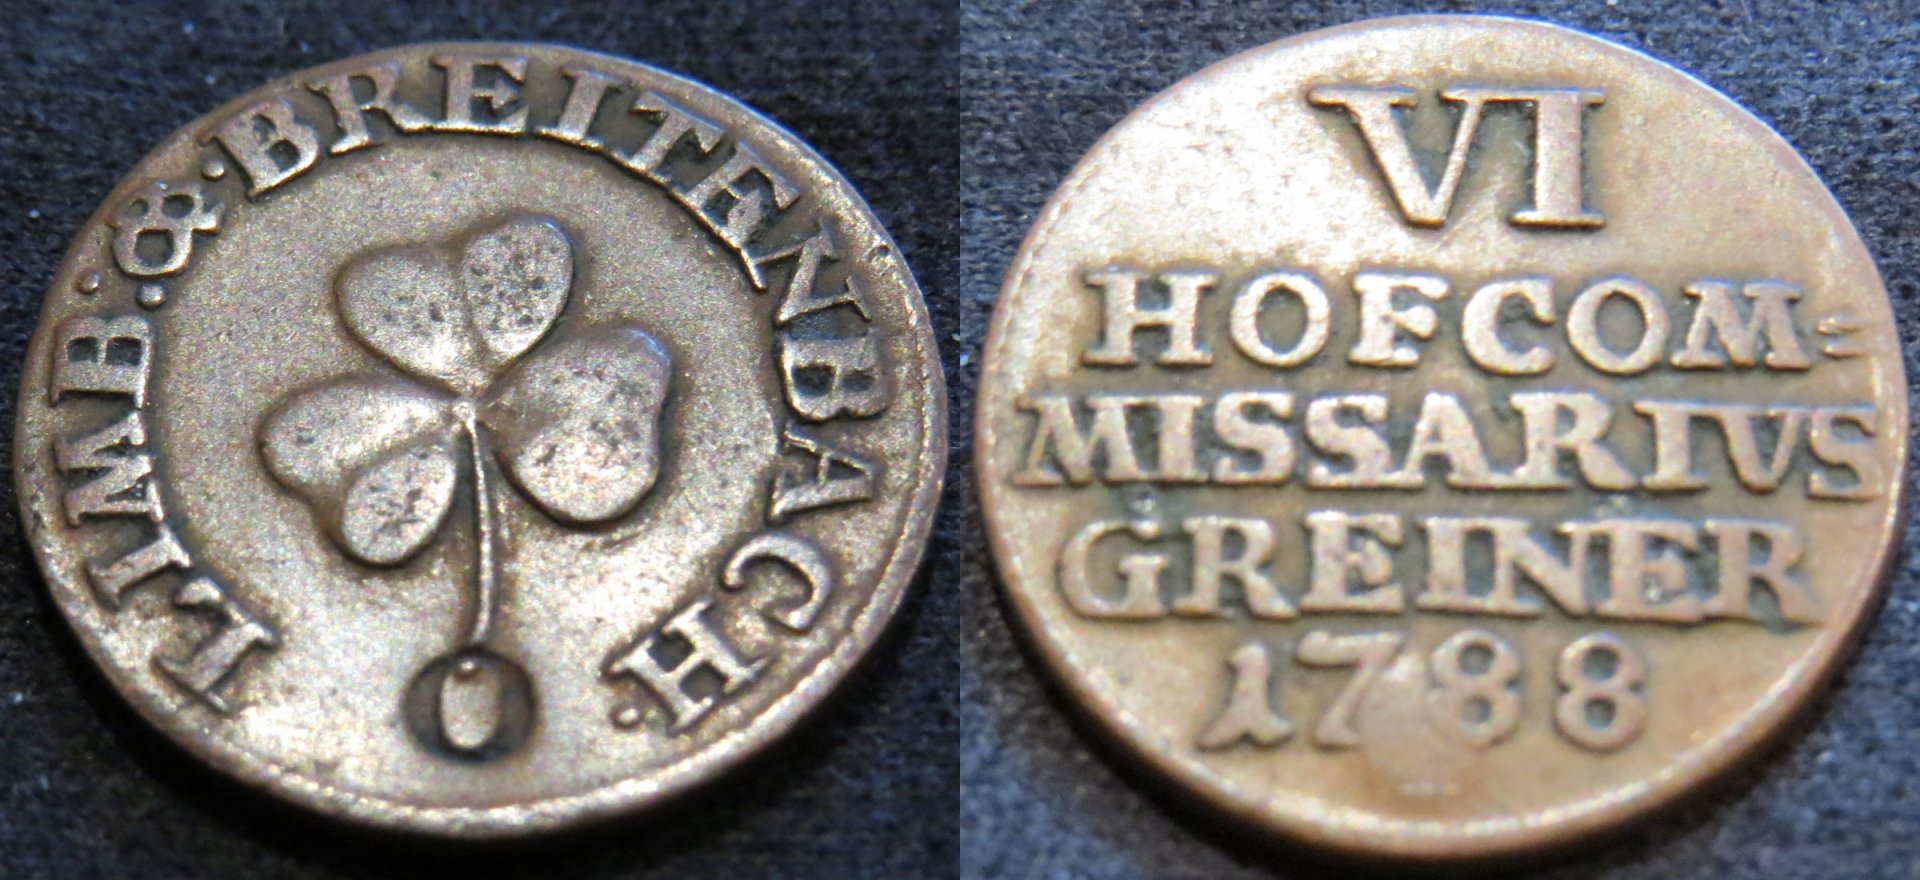 Limbach & Breitenback 6 Pfennig granary token 1788 copy.jpg